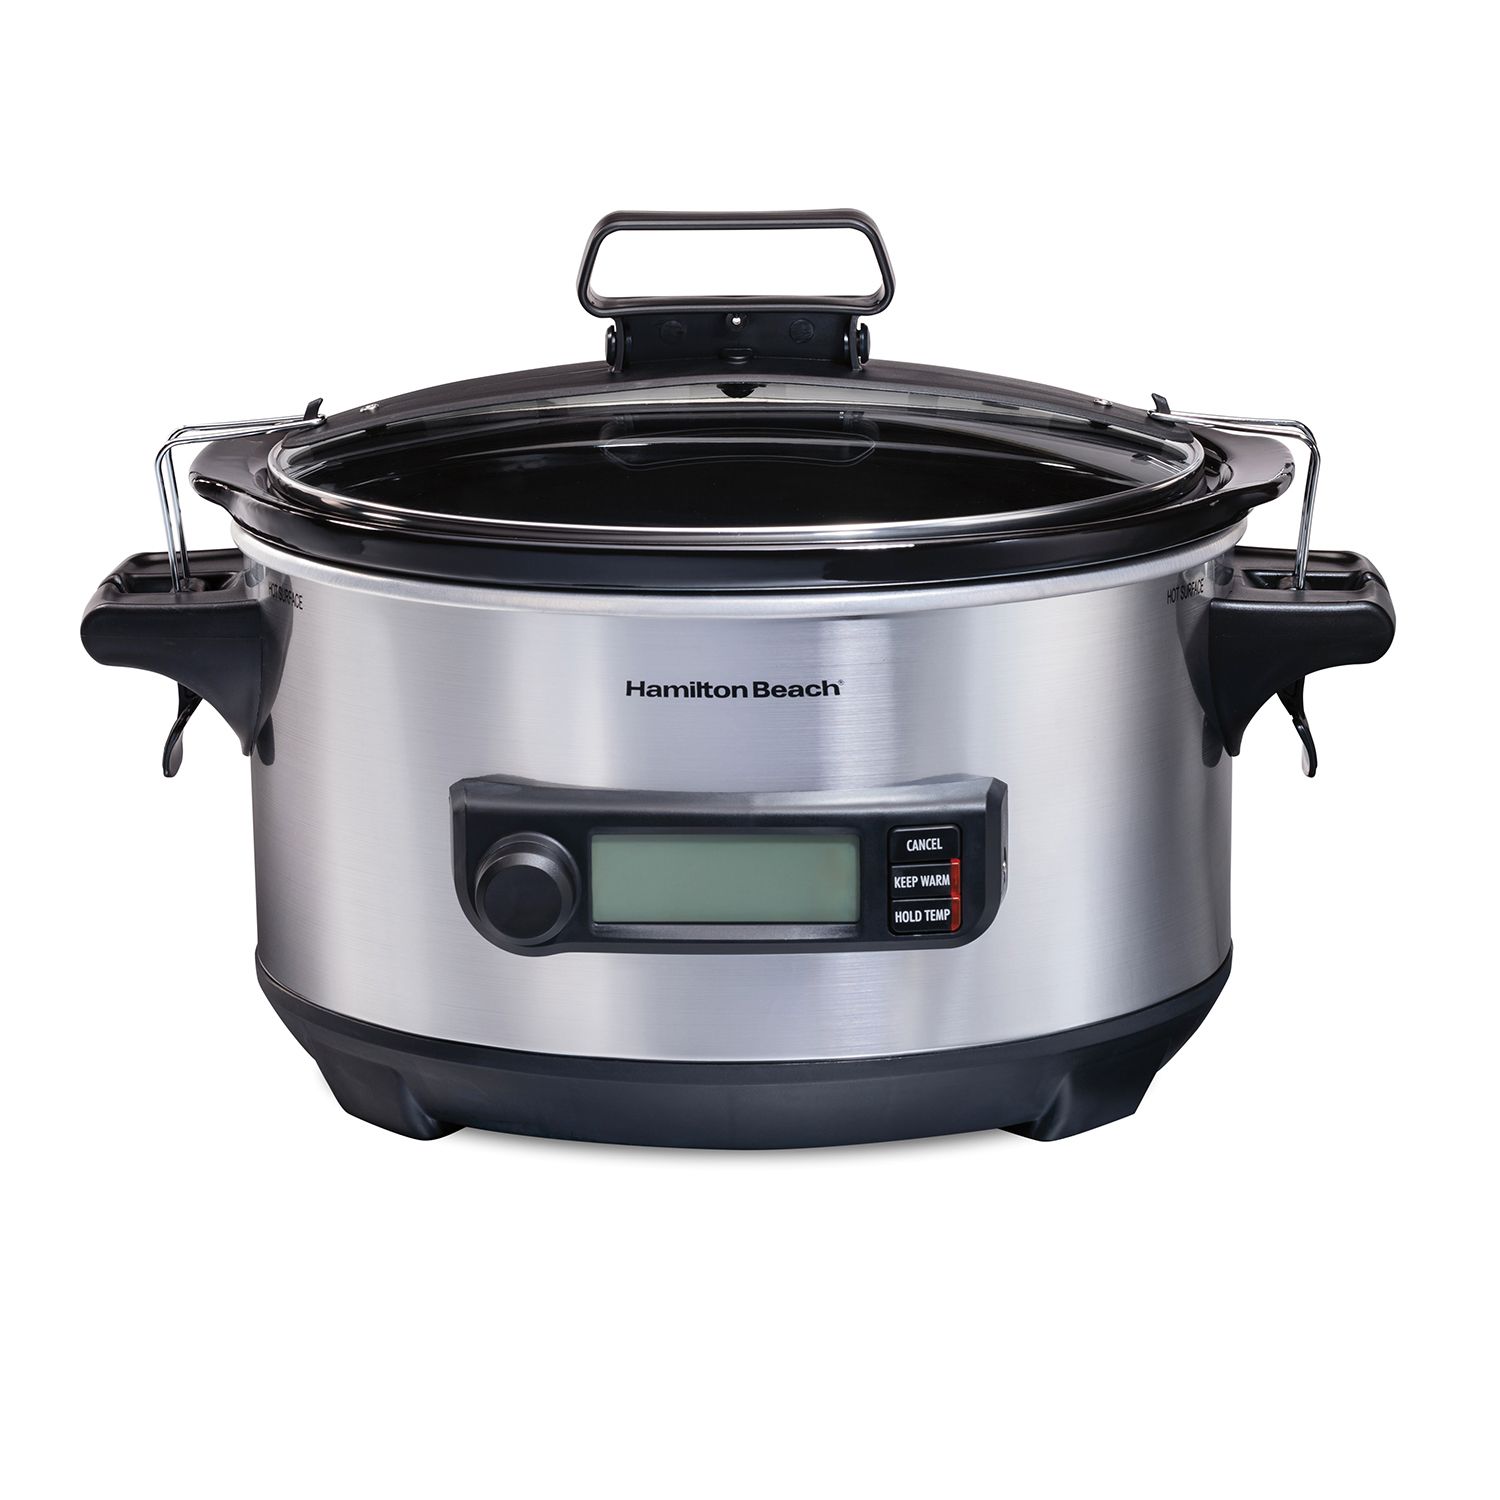 Crock-Pot® Programmable Choose-a-Crock Slow Cooker, Stainless